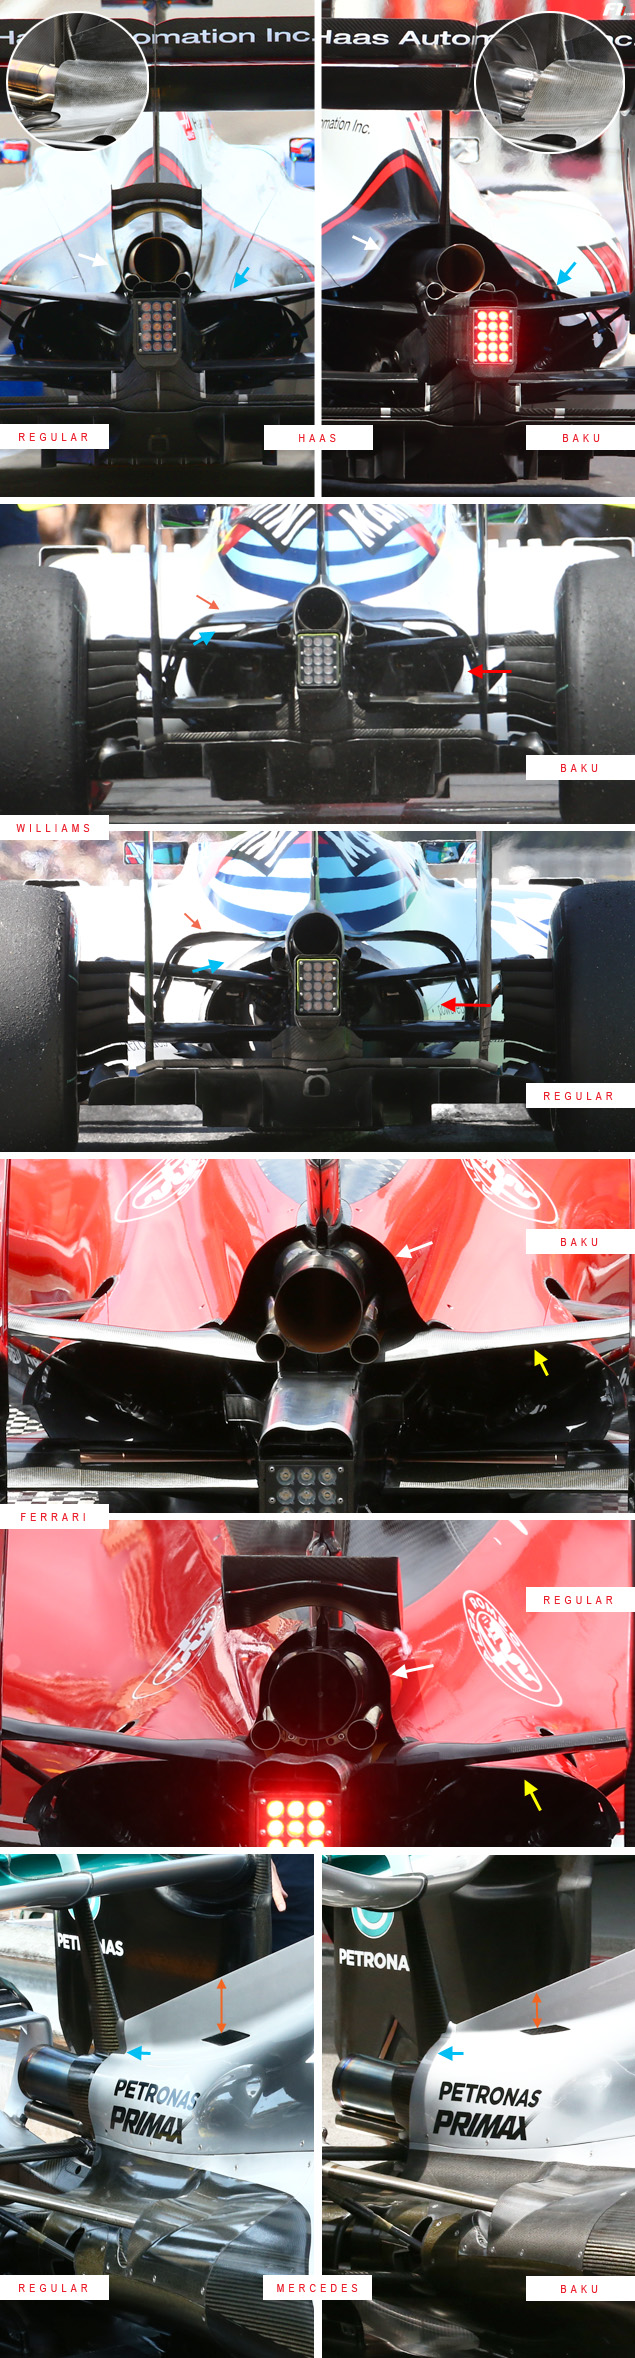 F1-technical-analysis-bakou-engine-covers_EN